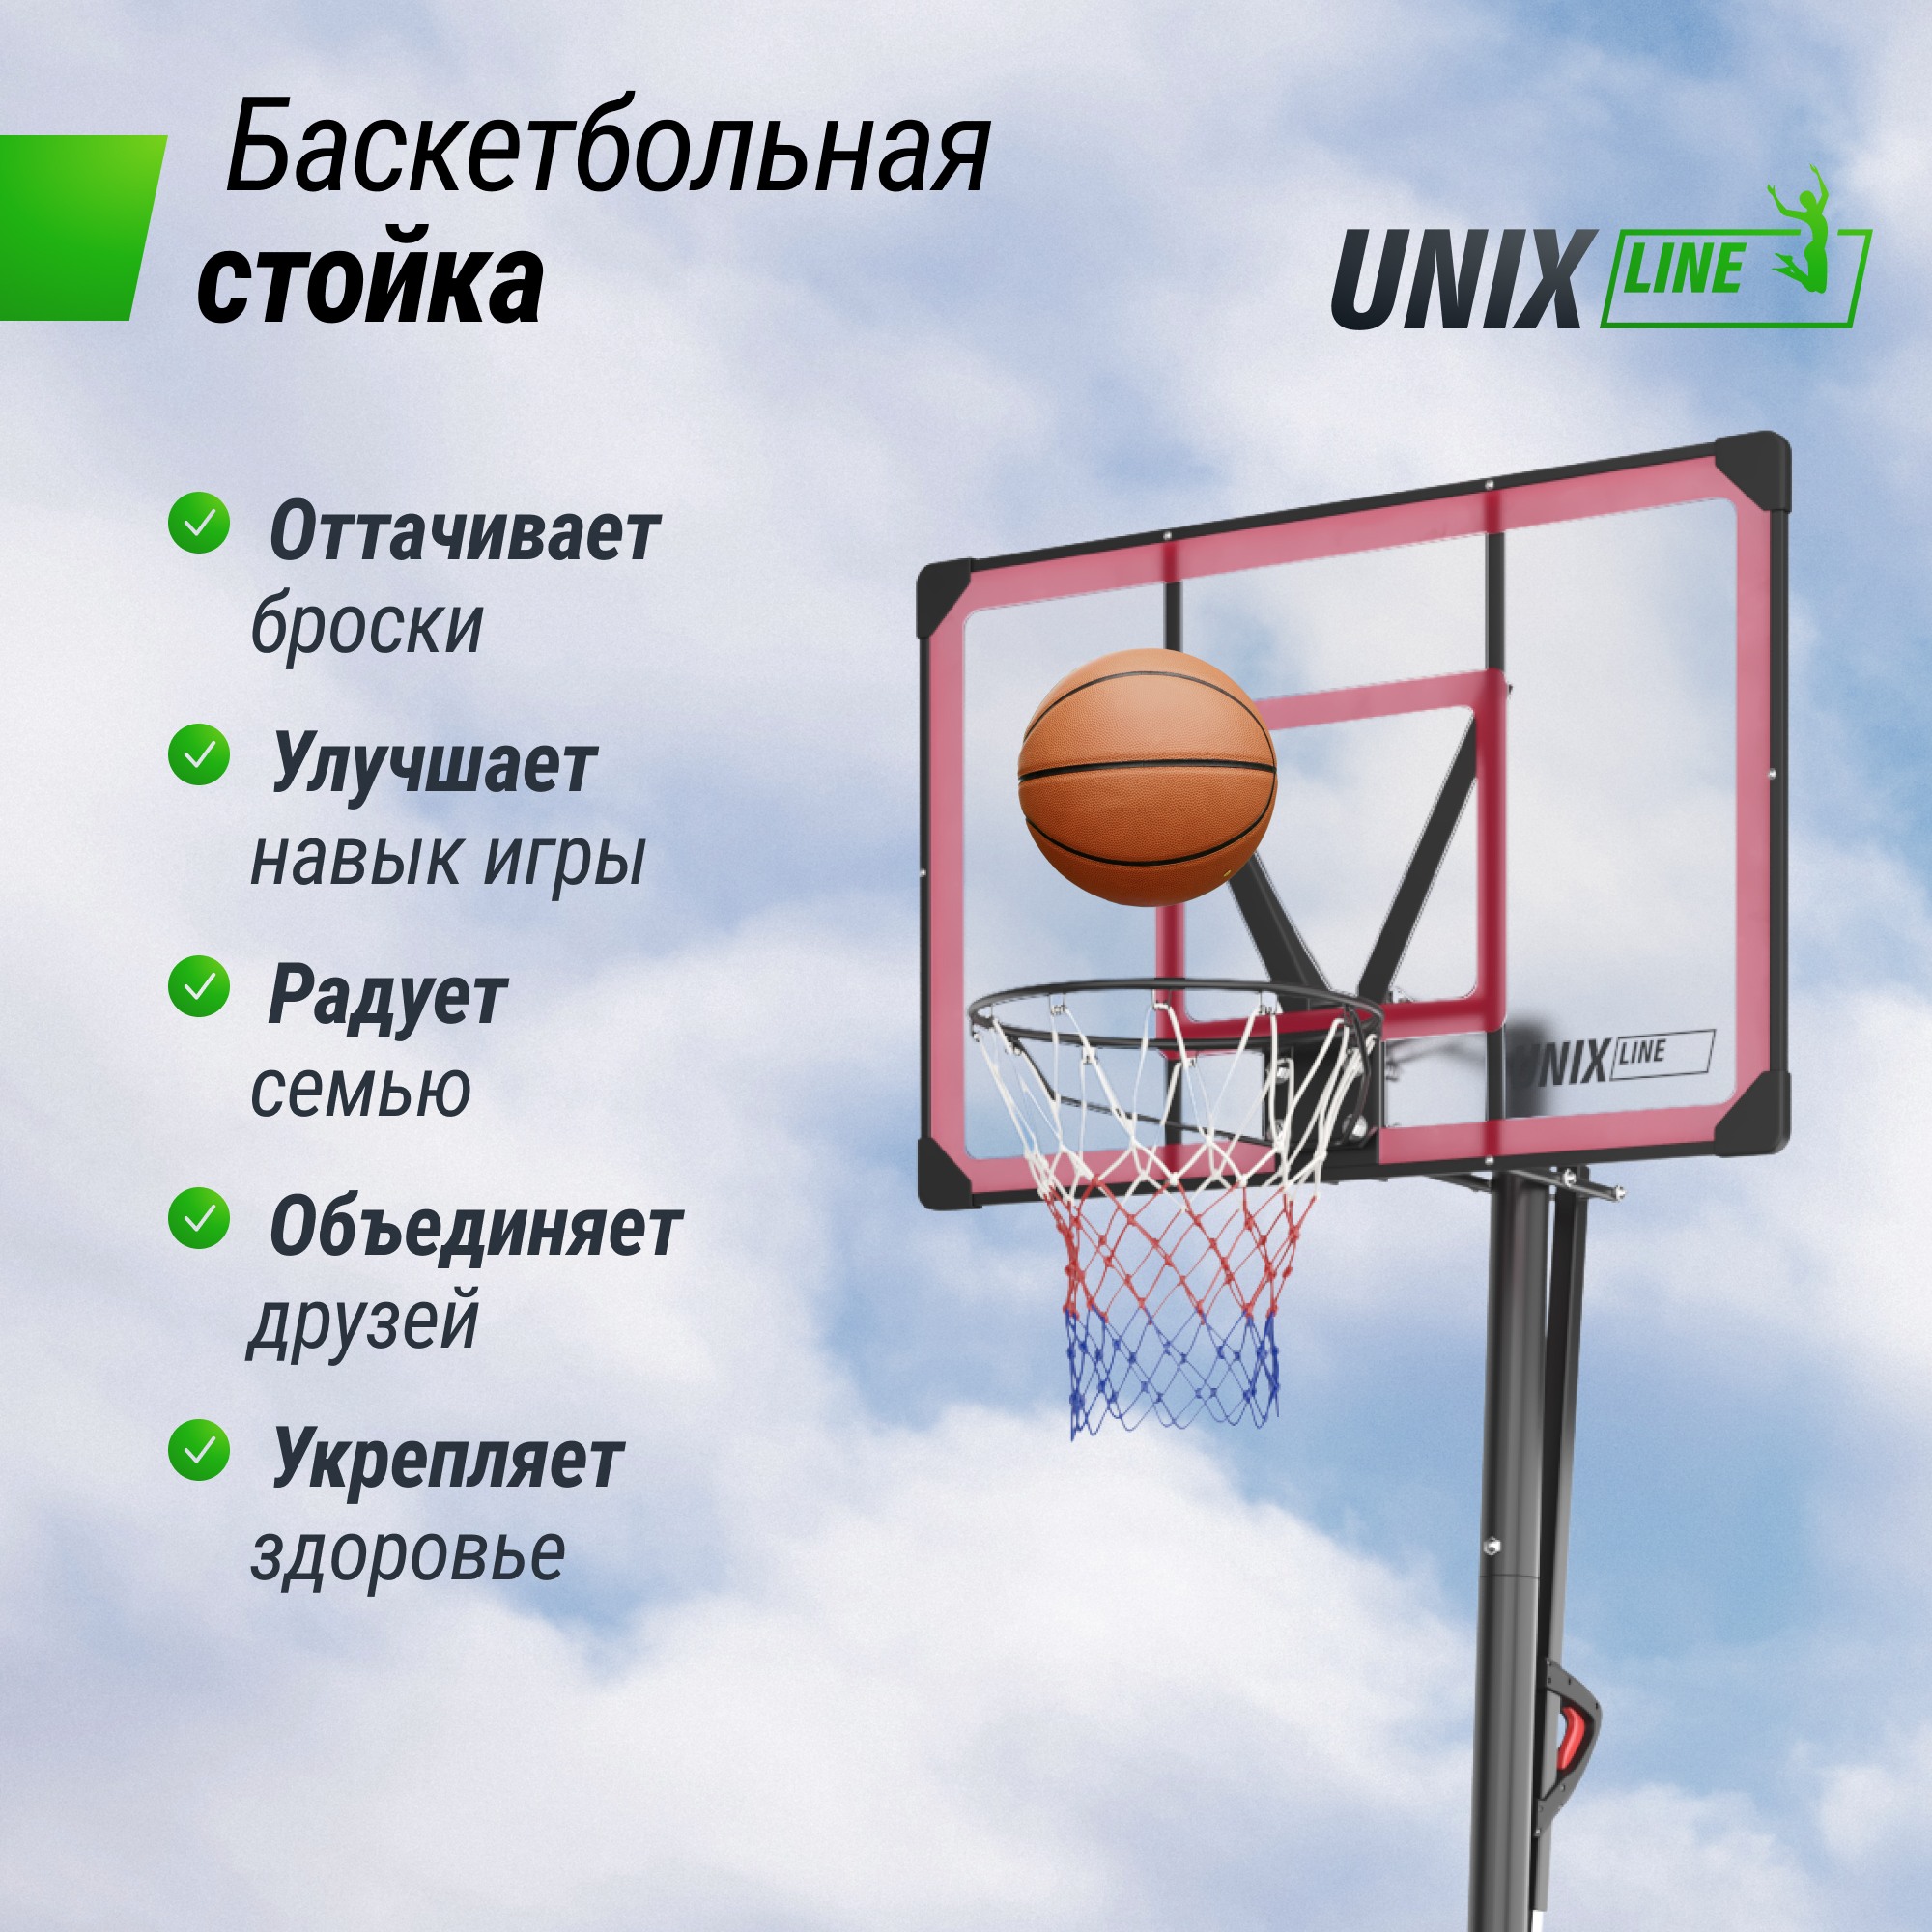 Баскетбольная стойка Unix Line B-Stand-PC 48"x32" R45 H230-305см BSTS305_48PCBK 2000_2000